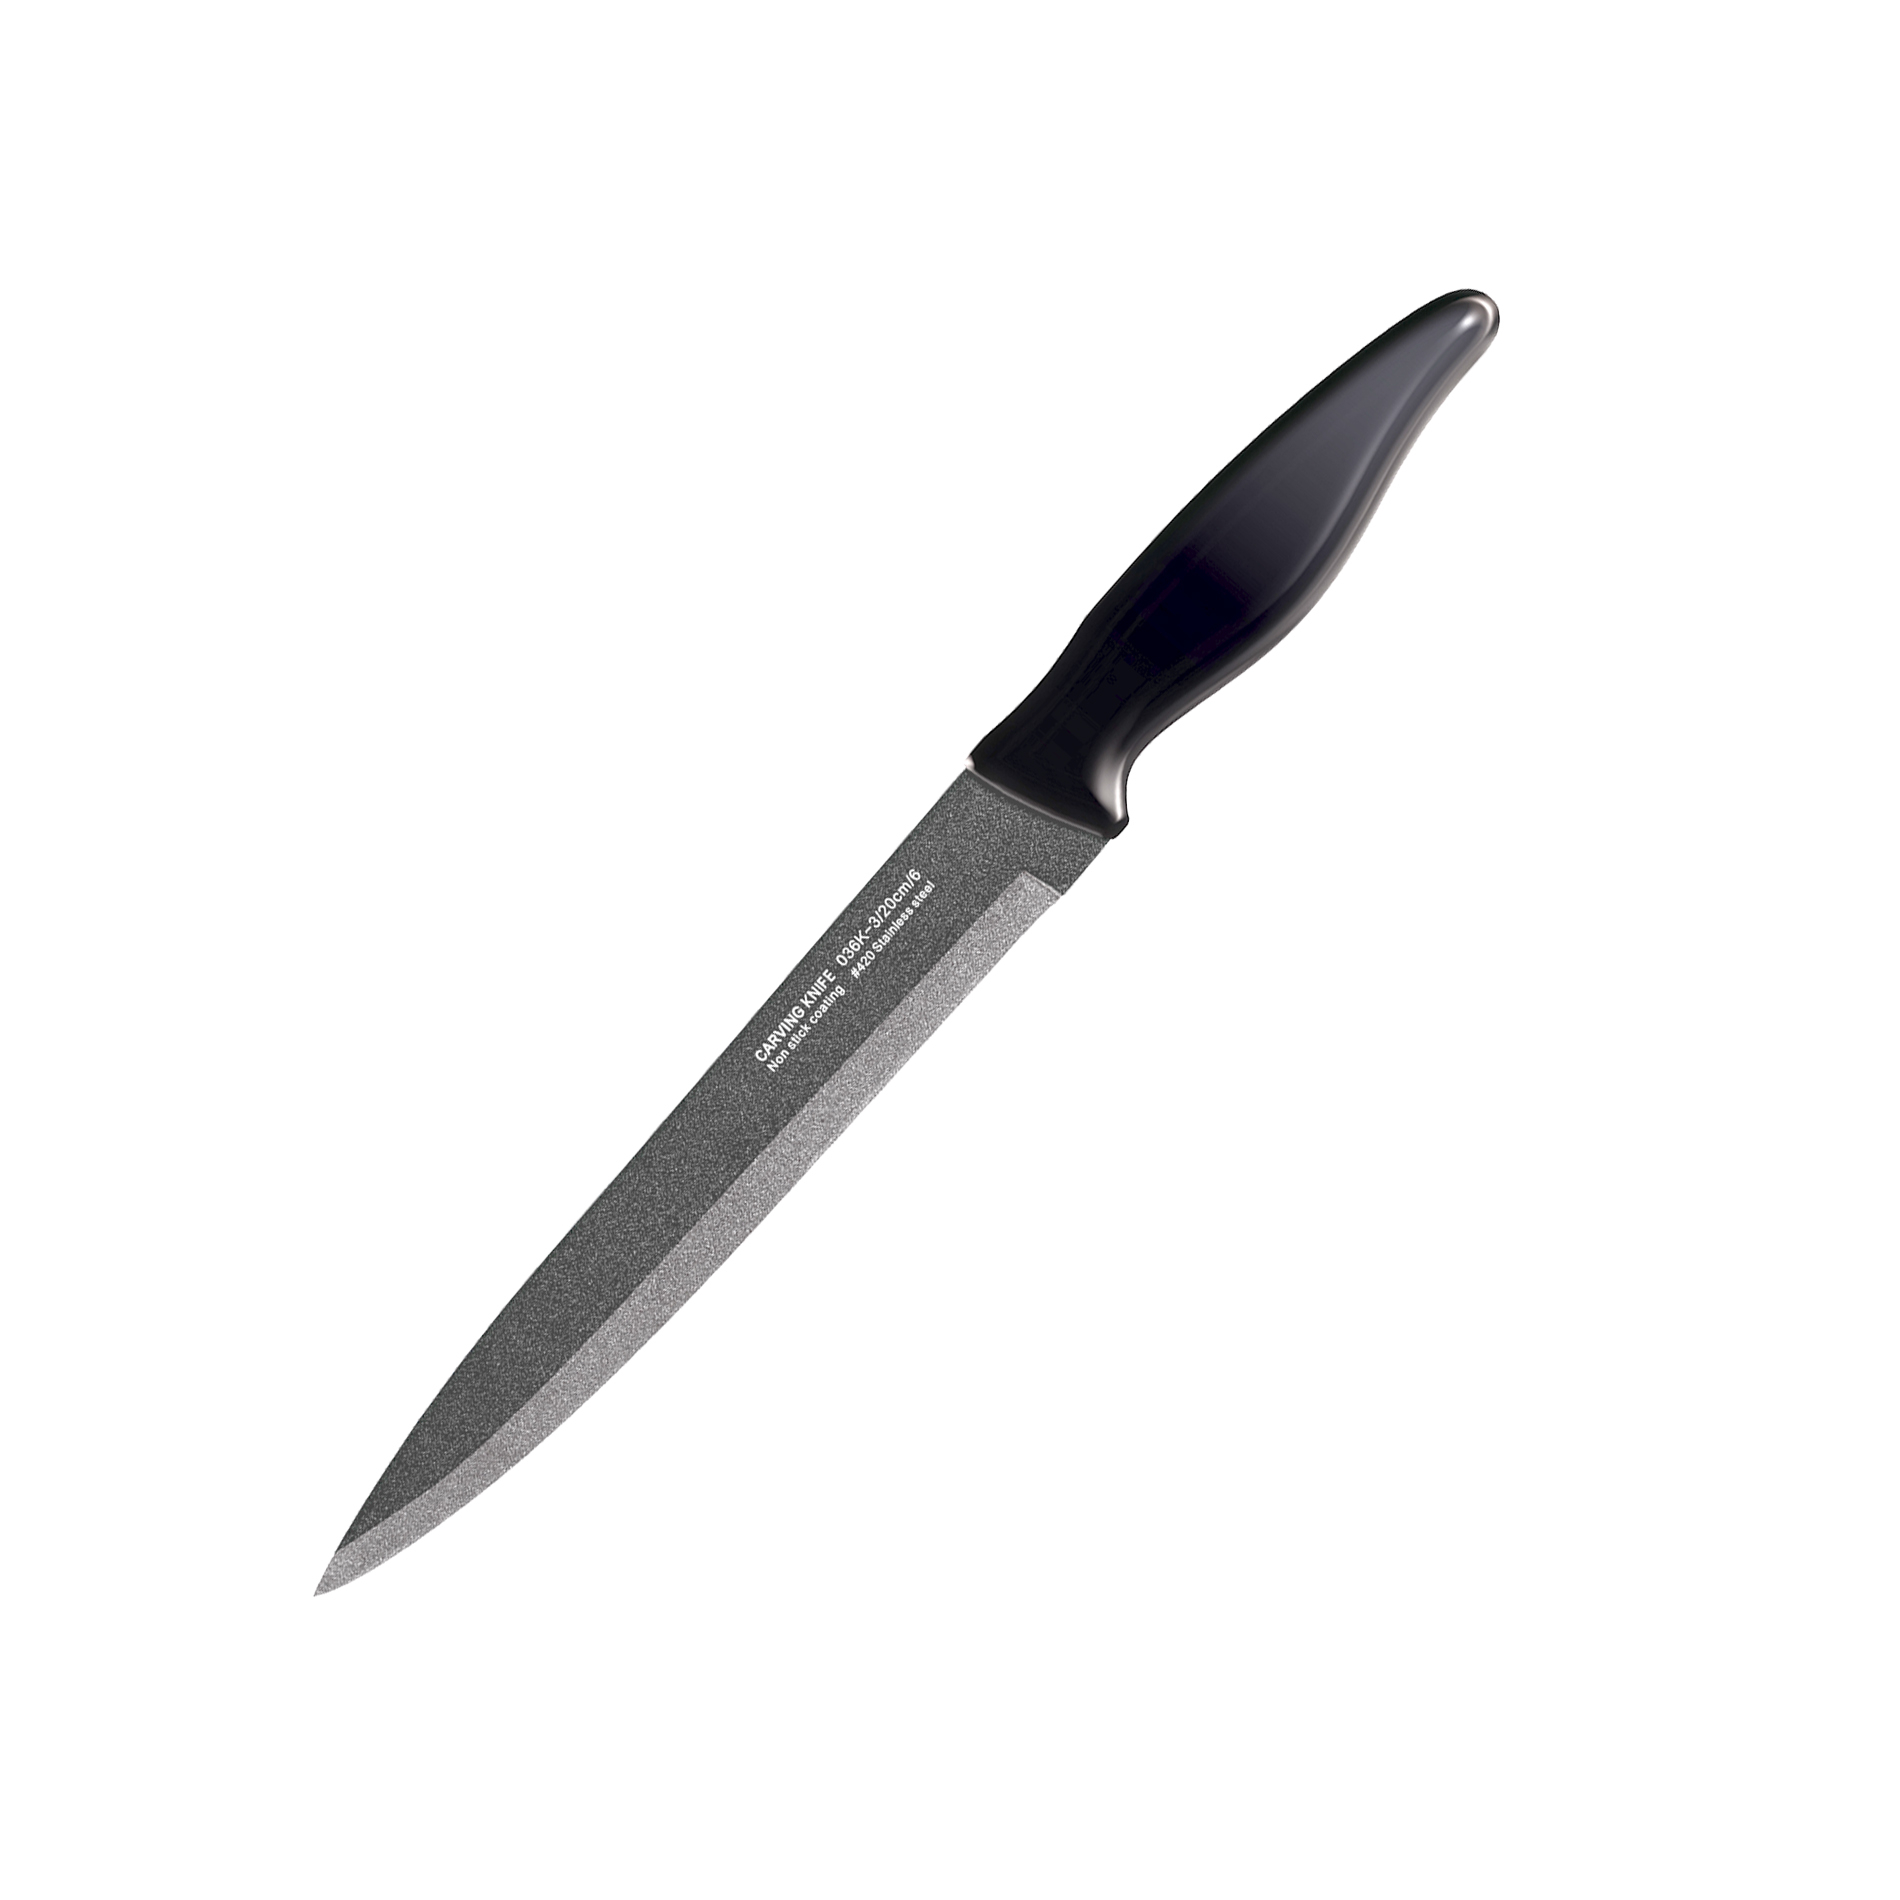 Smile SNS-4 Tacoma Juego de 5 cuchillos de cocina de acero inoxidable con recubrimiento antiadherente, bloque madera magnético plegable linea moderna